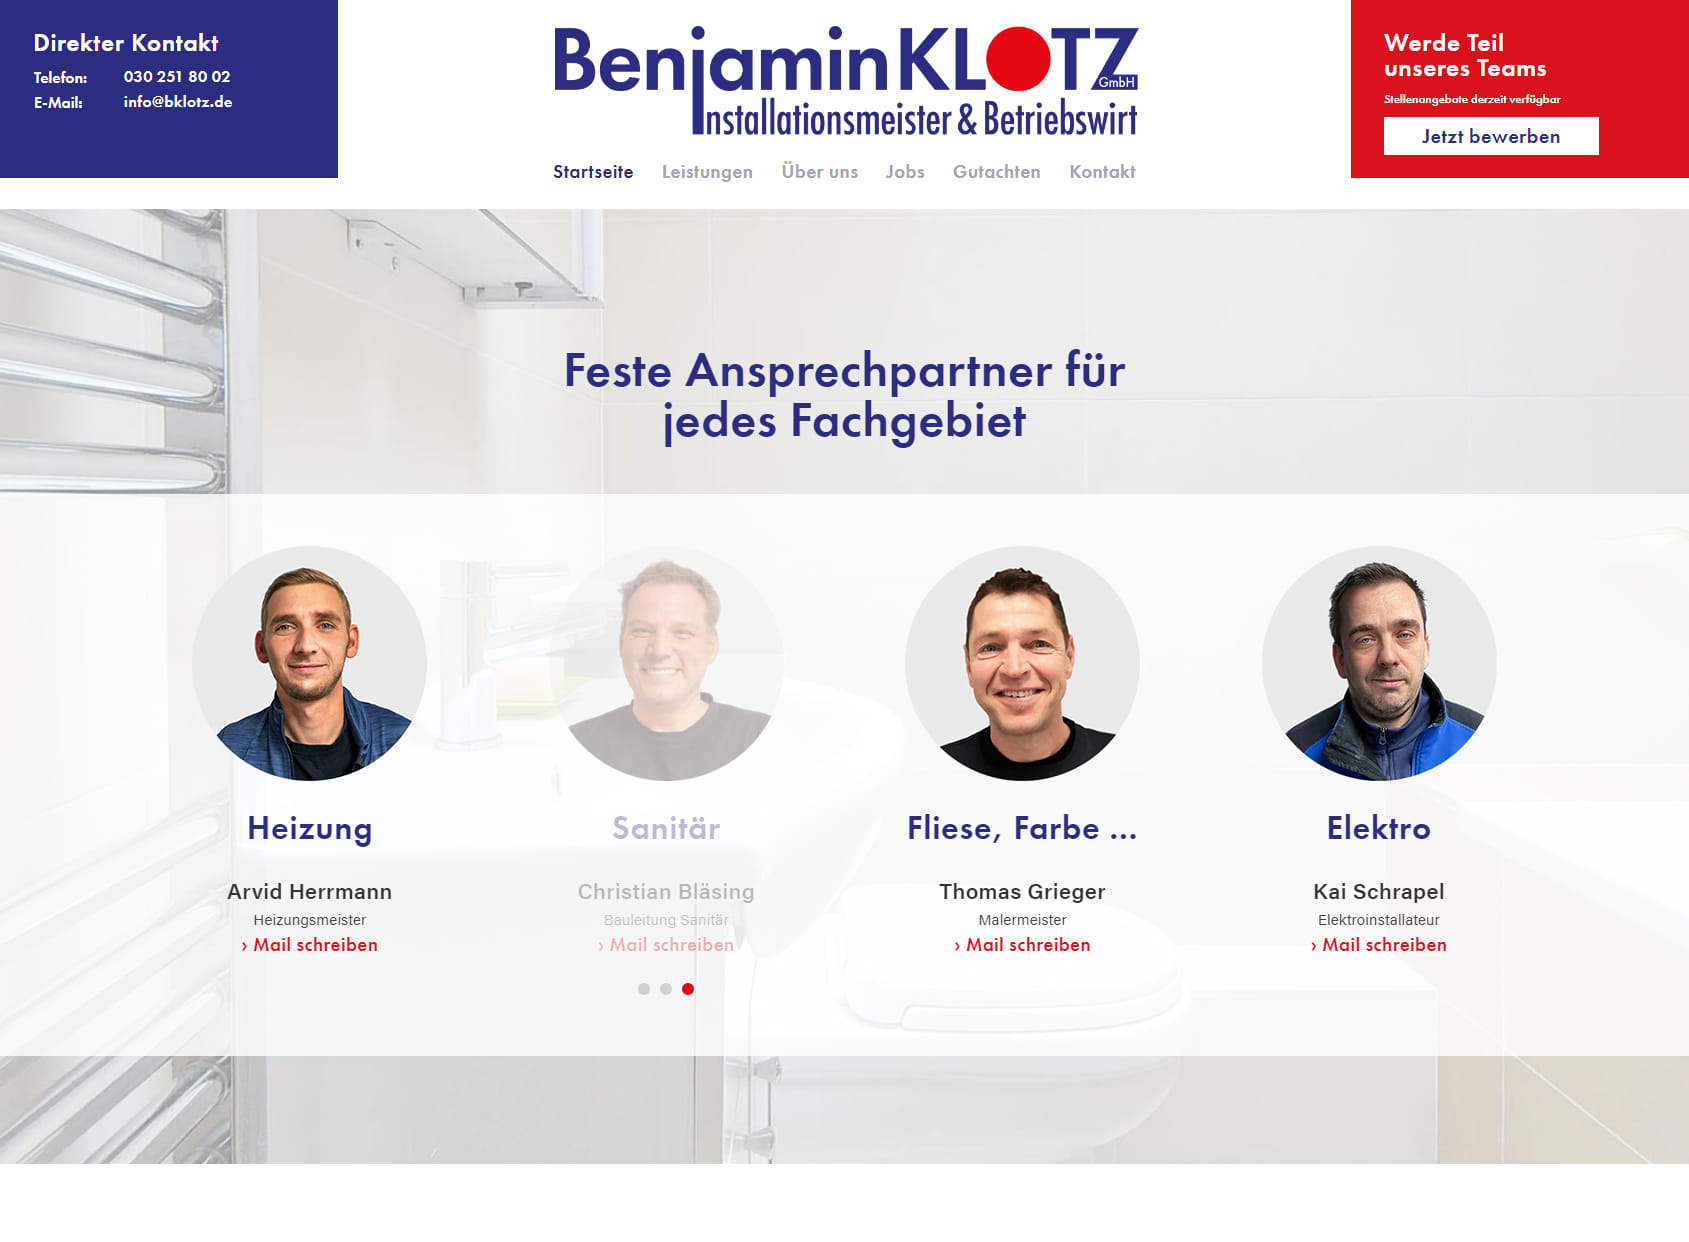 Benjamin Klotz GmbH